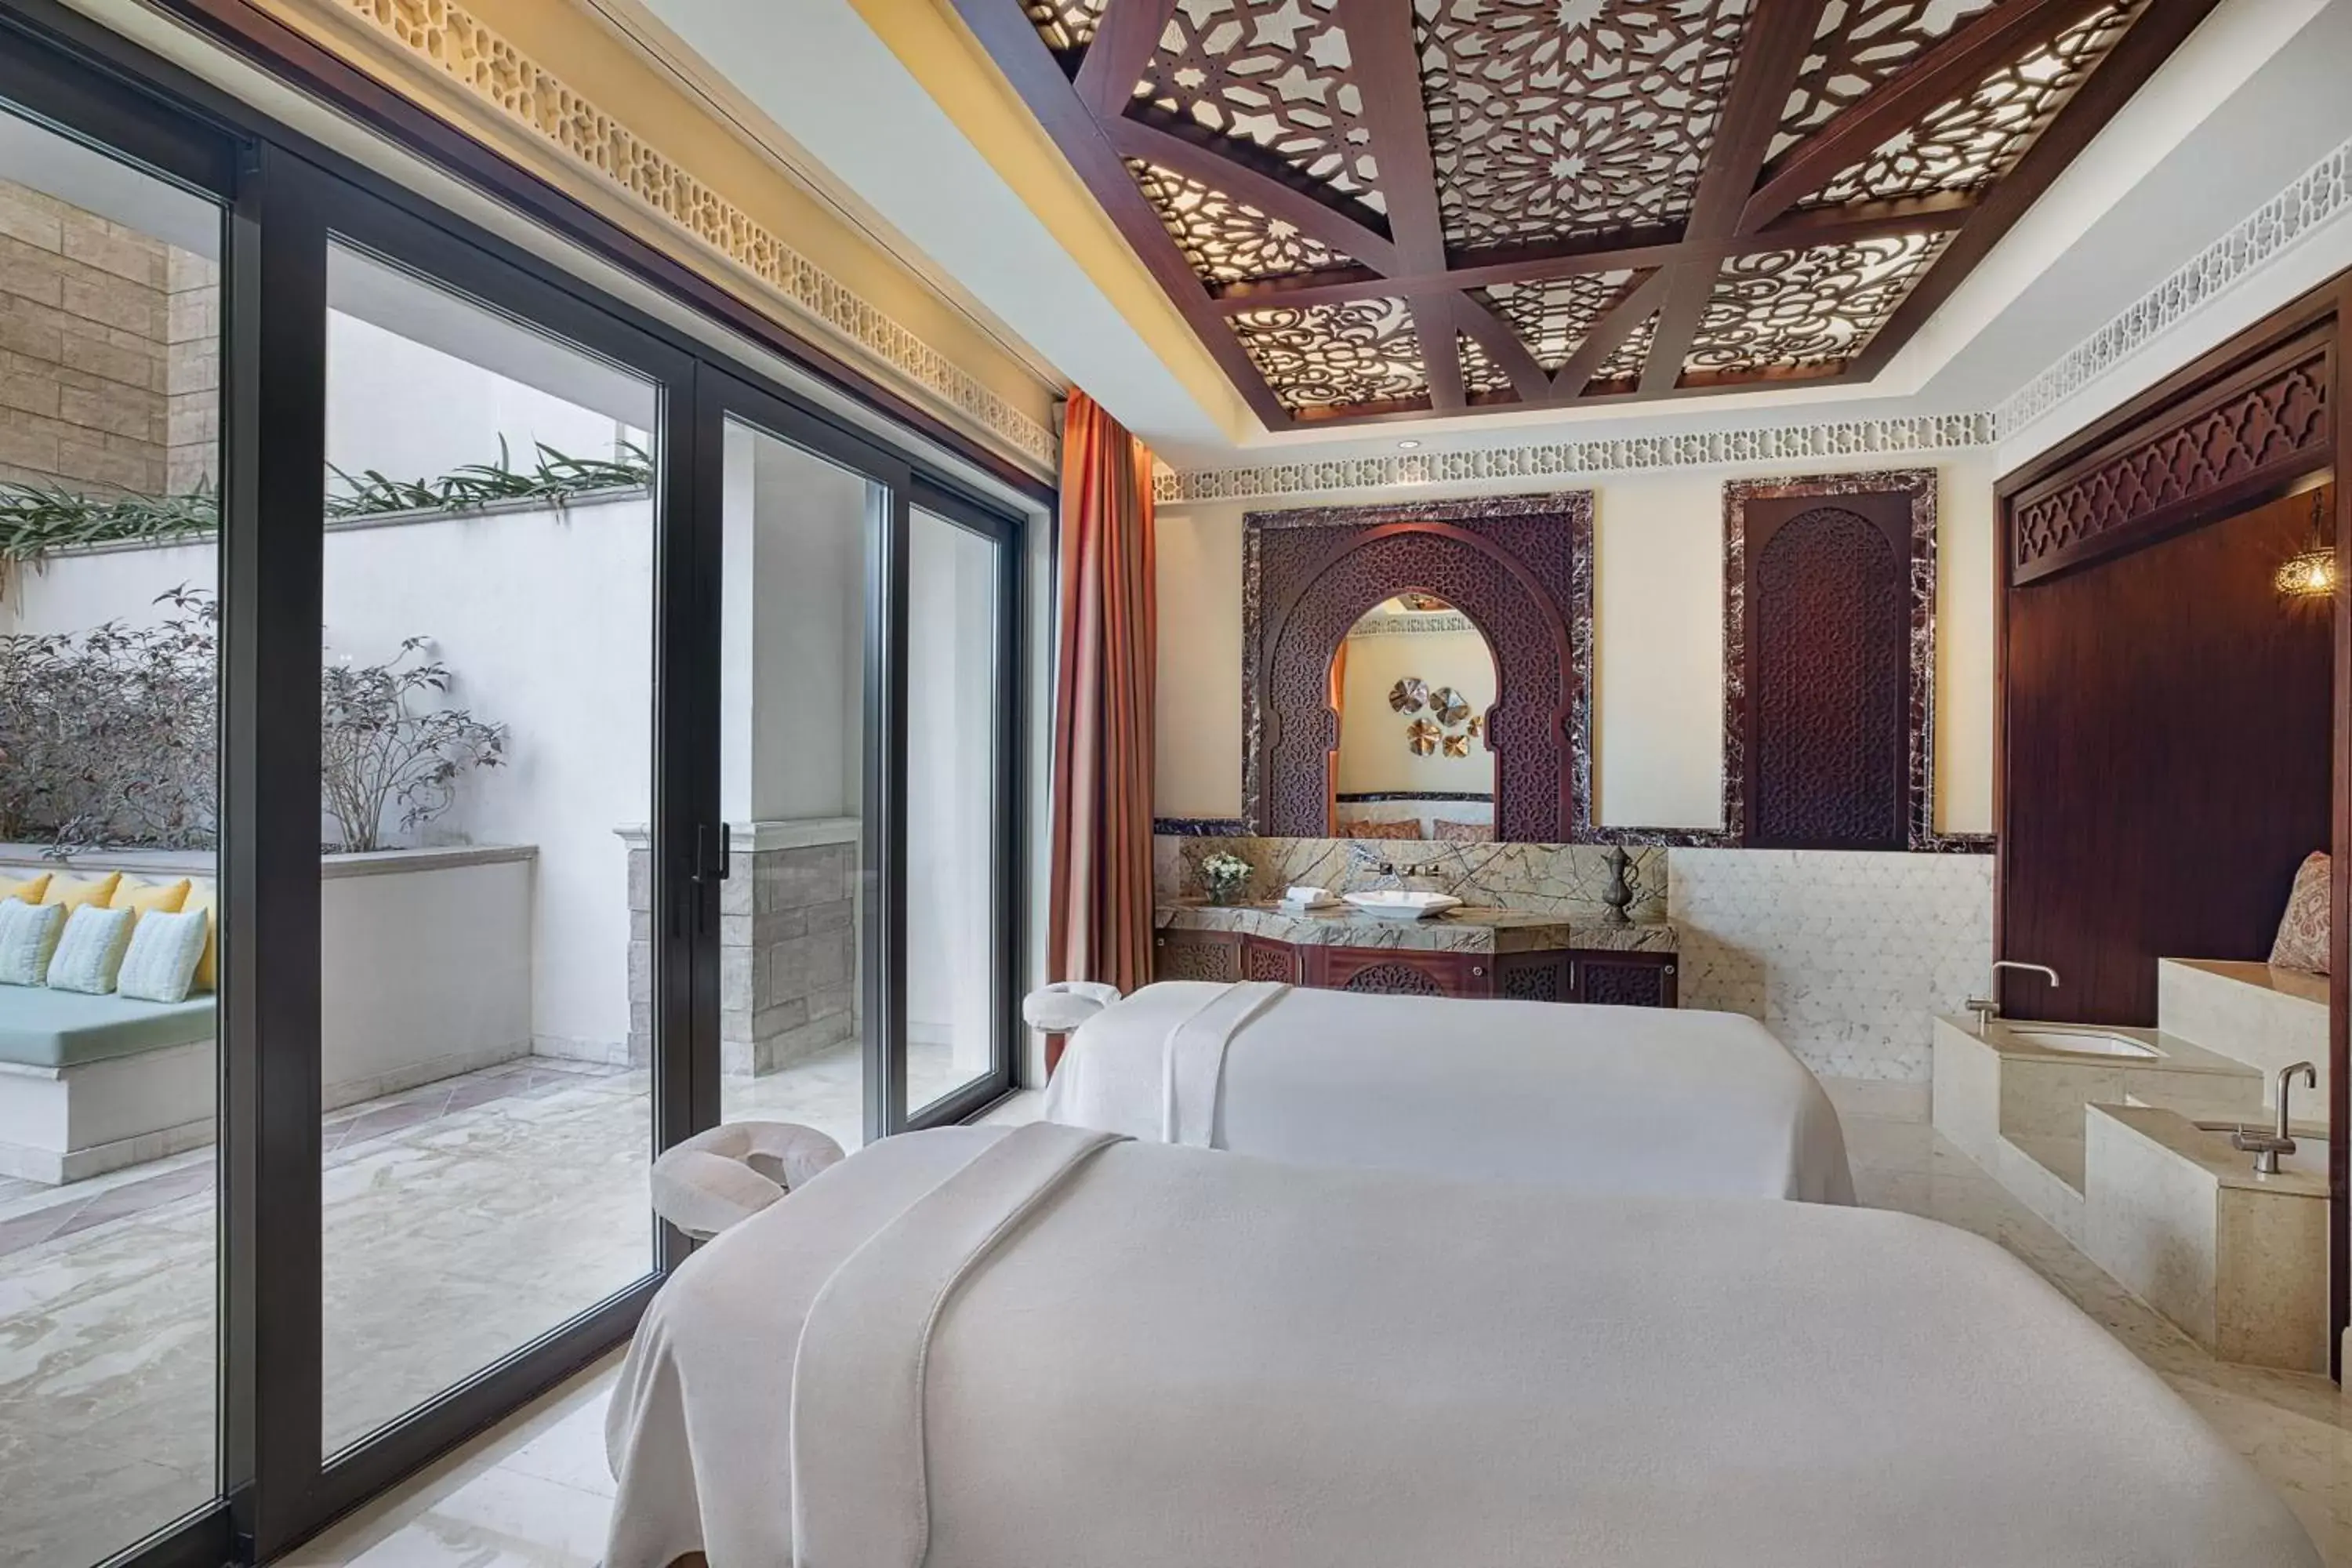 Photo of the whole room in The St. Regis Saadiyat Island Resort, Abu Dhabi